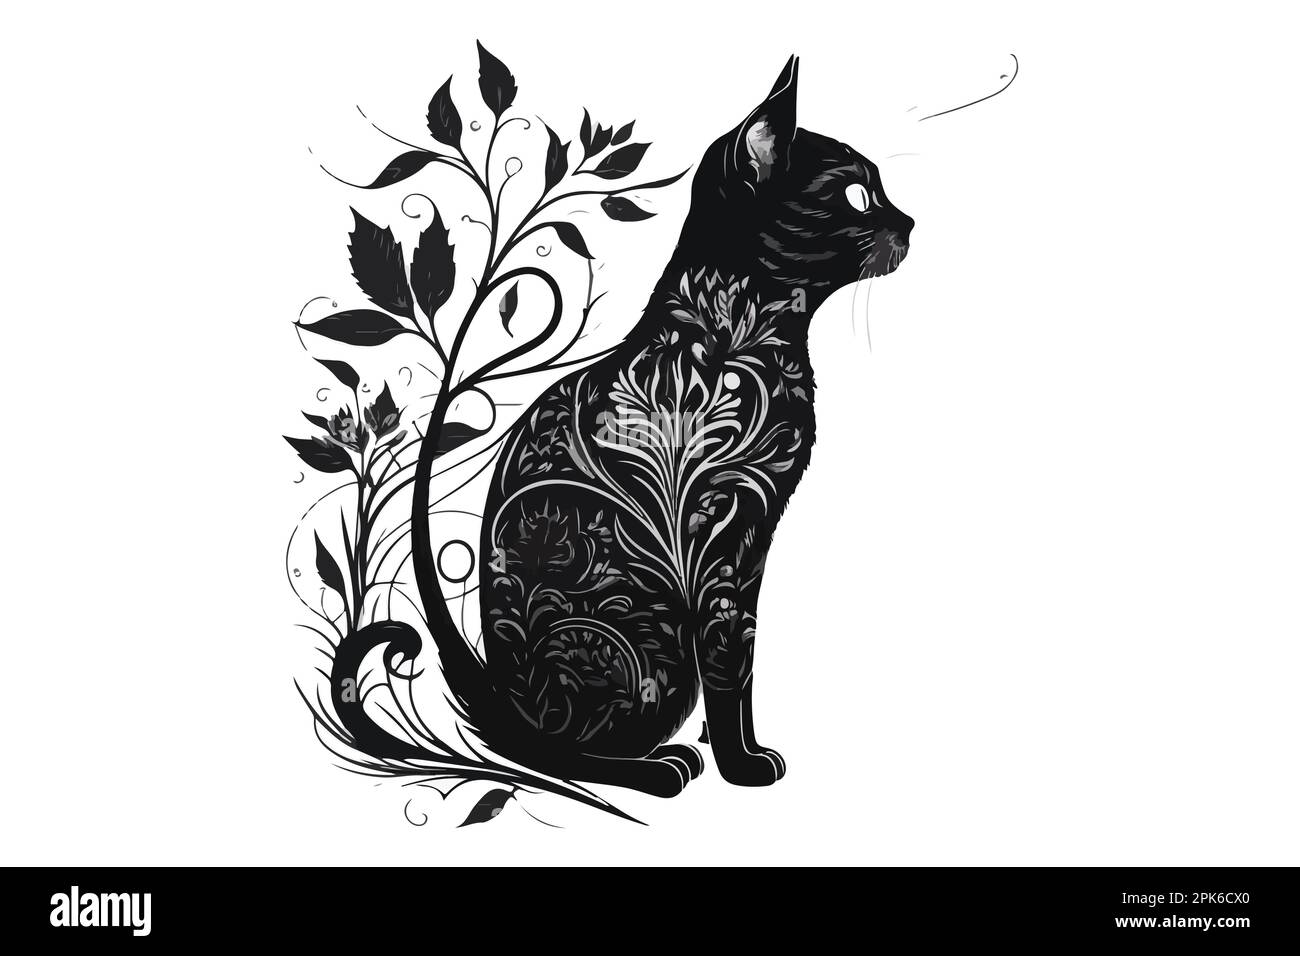 cat tattoo black and white vector illustration Stock Vector Image & Art ...